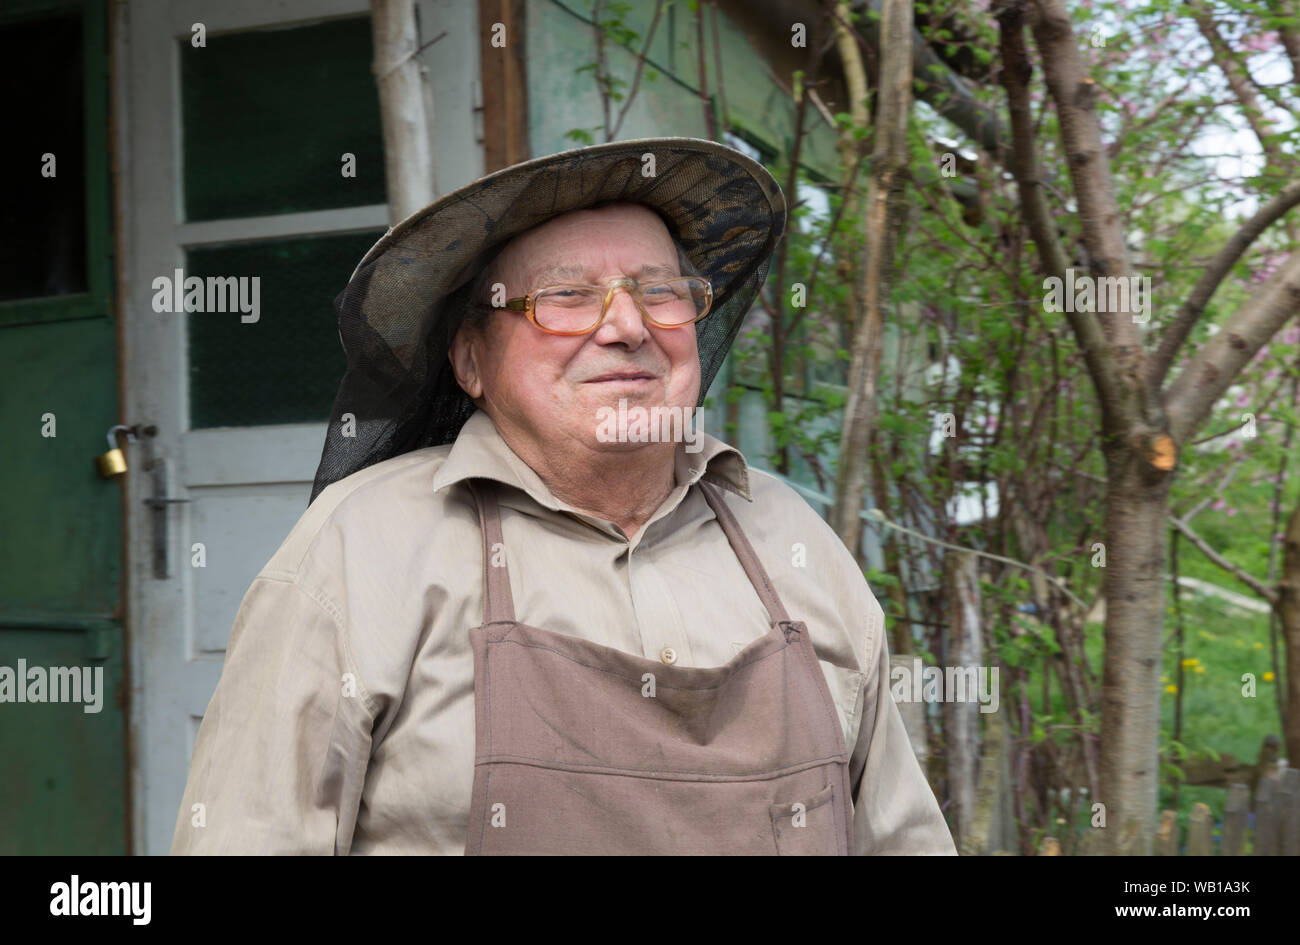 Rumania, Ciresoaia, Portrait of smiling beekeeper with beekeper's hood Stock Photo